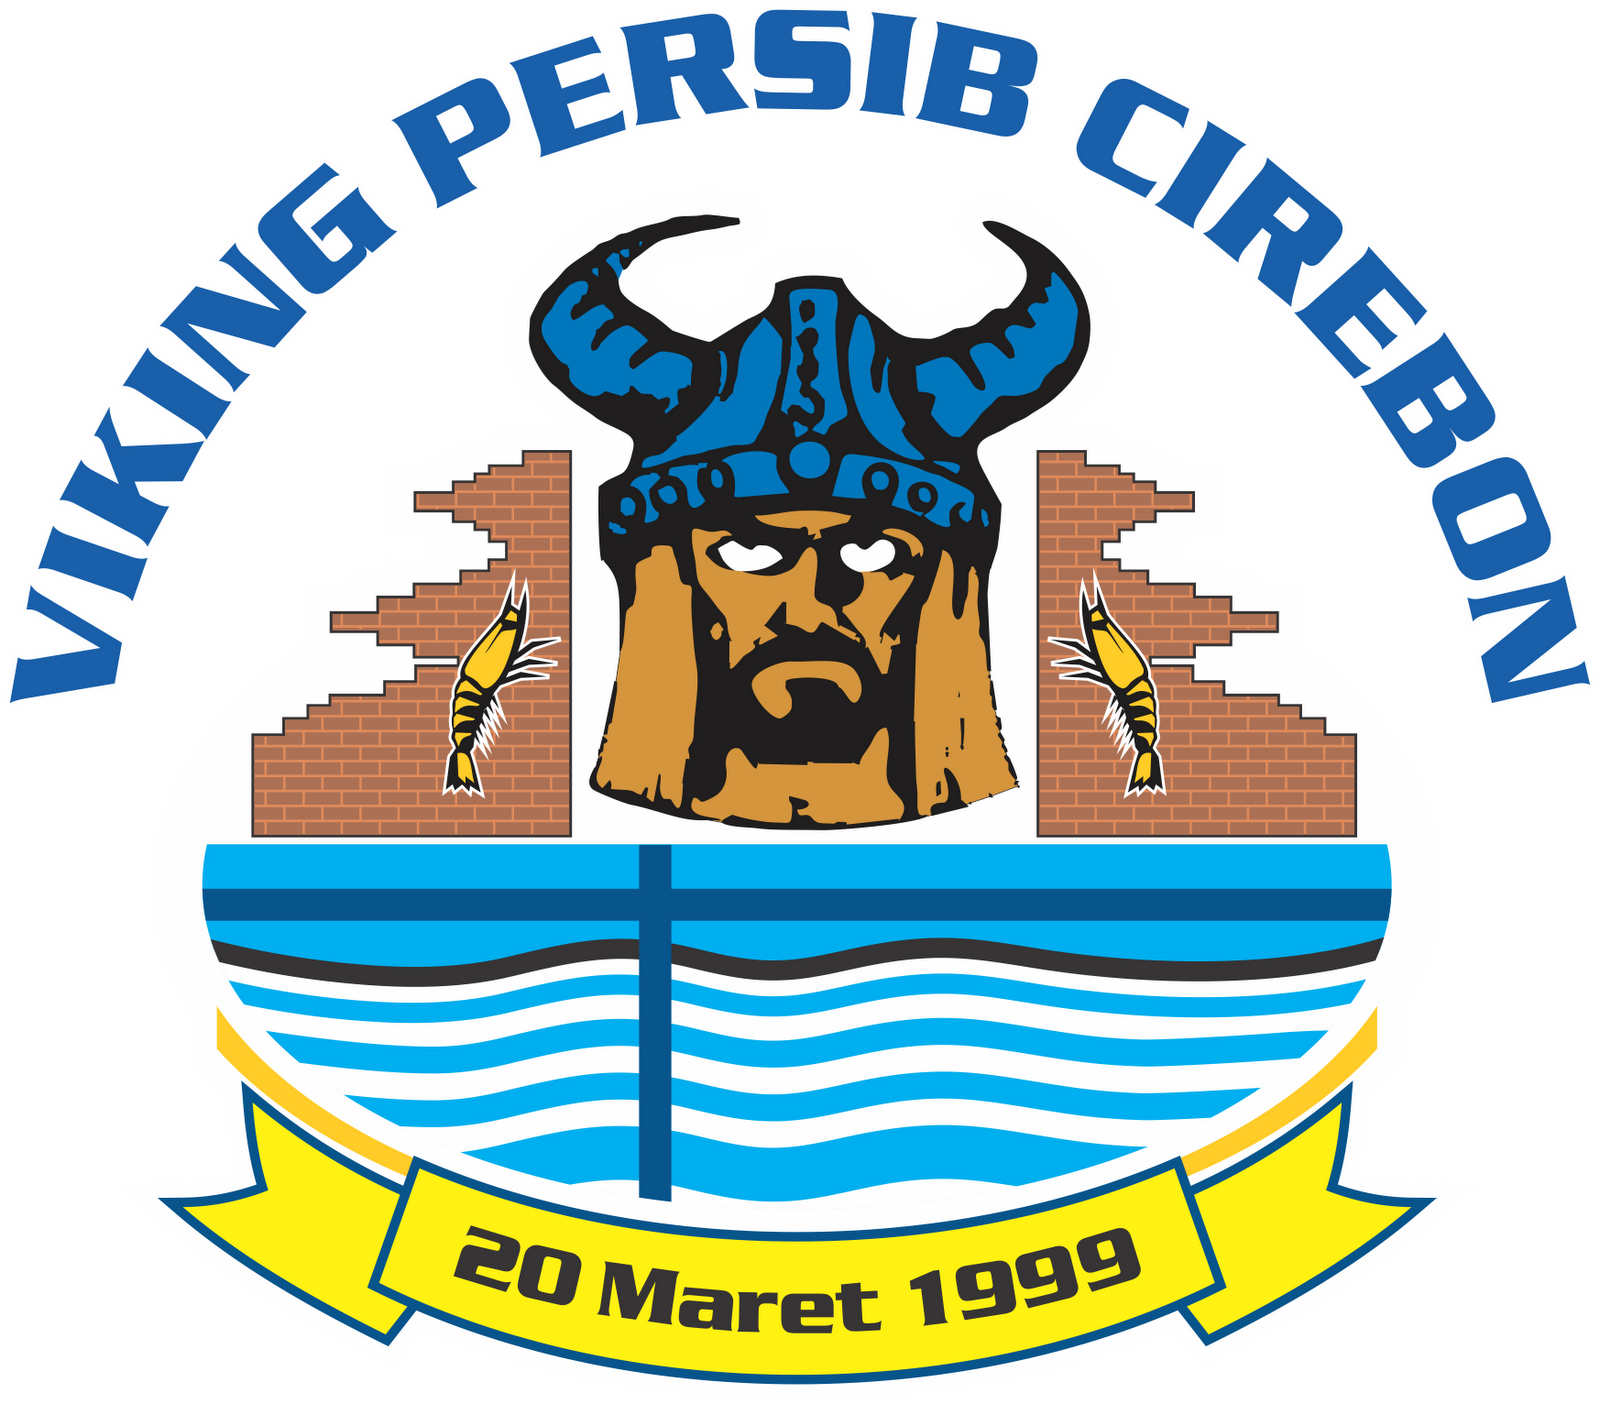 Viking Persib Bandung Gif Download Gambar / Foto | Zonatrick.CoM